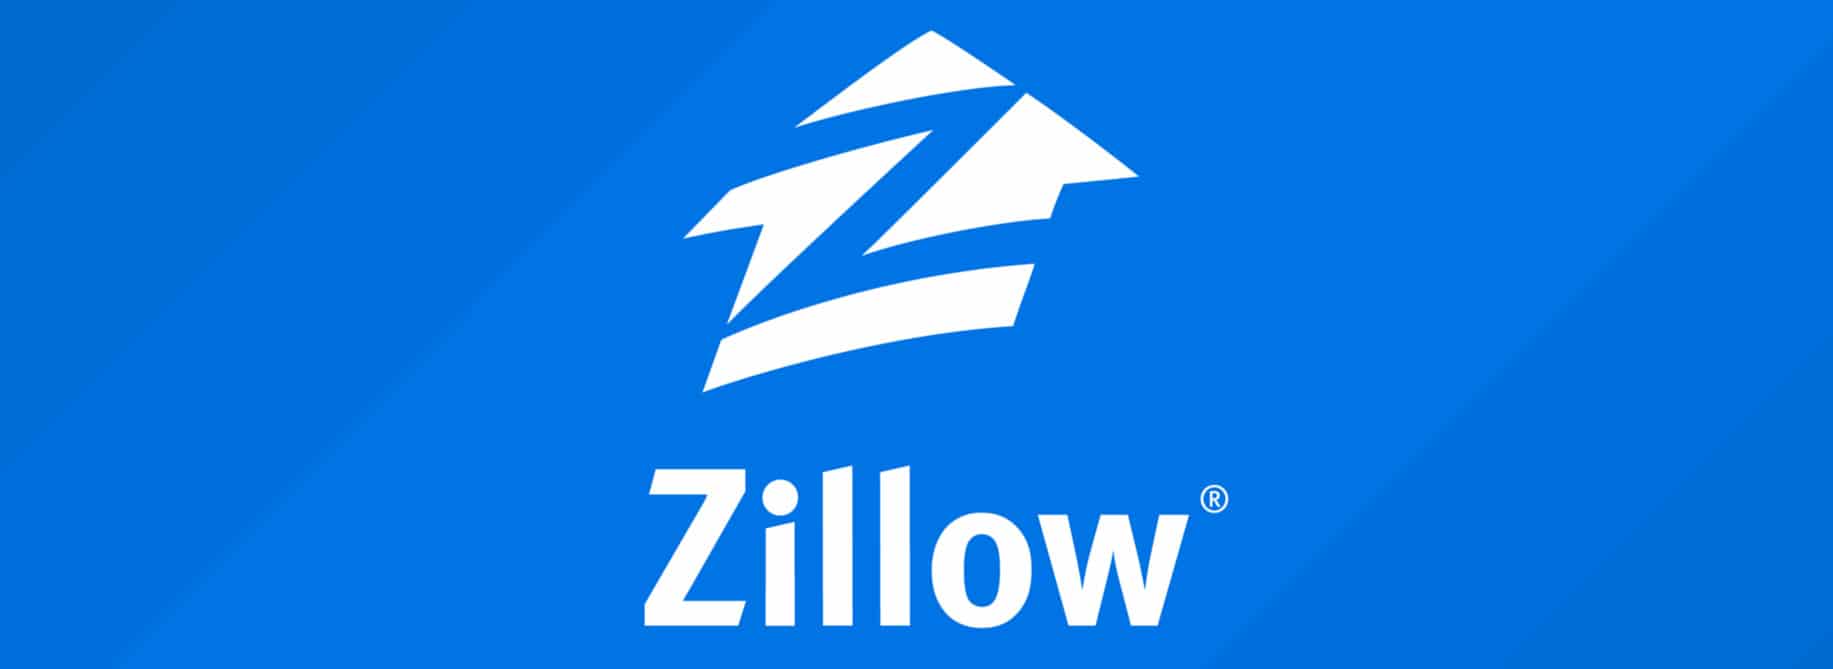 Zillow_Sanibel-logo2